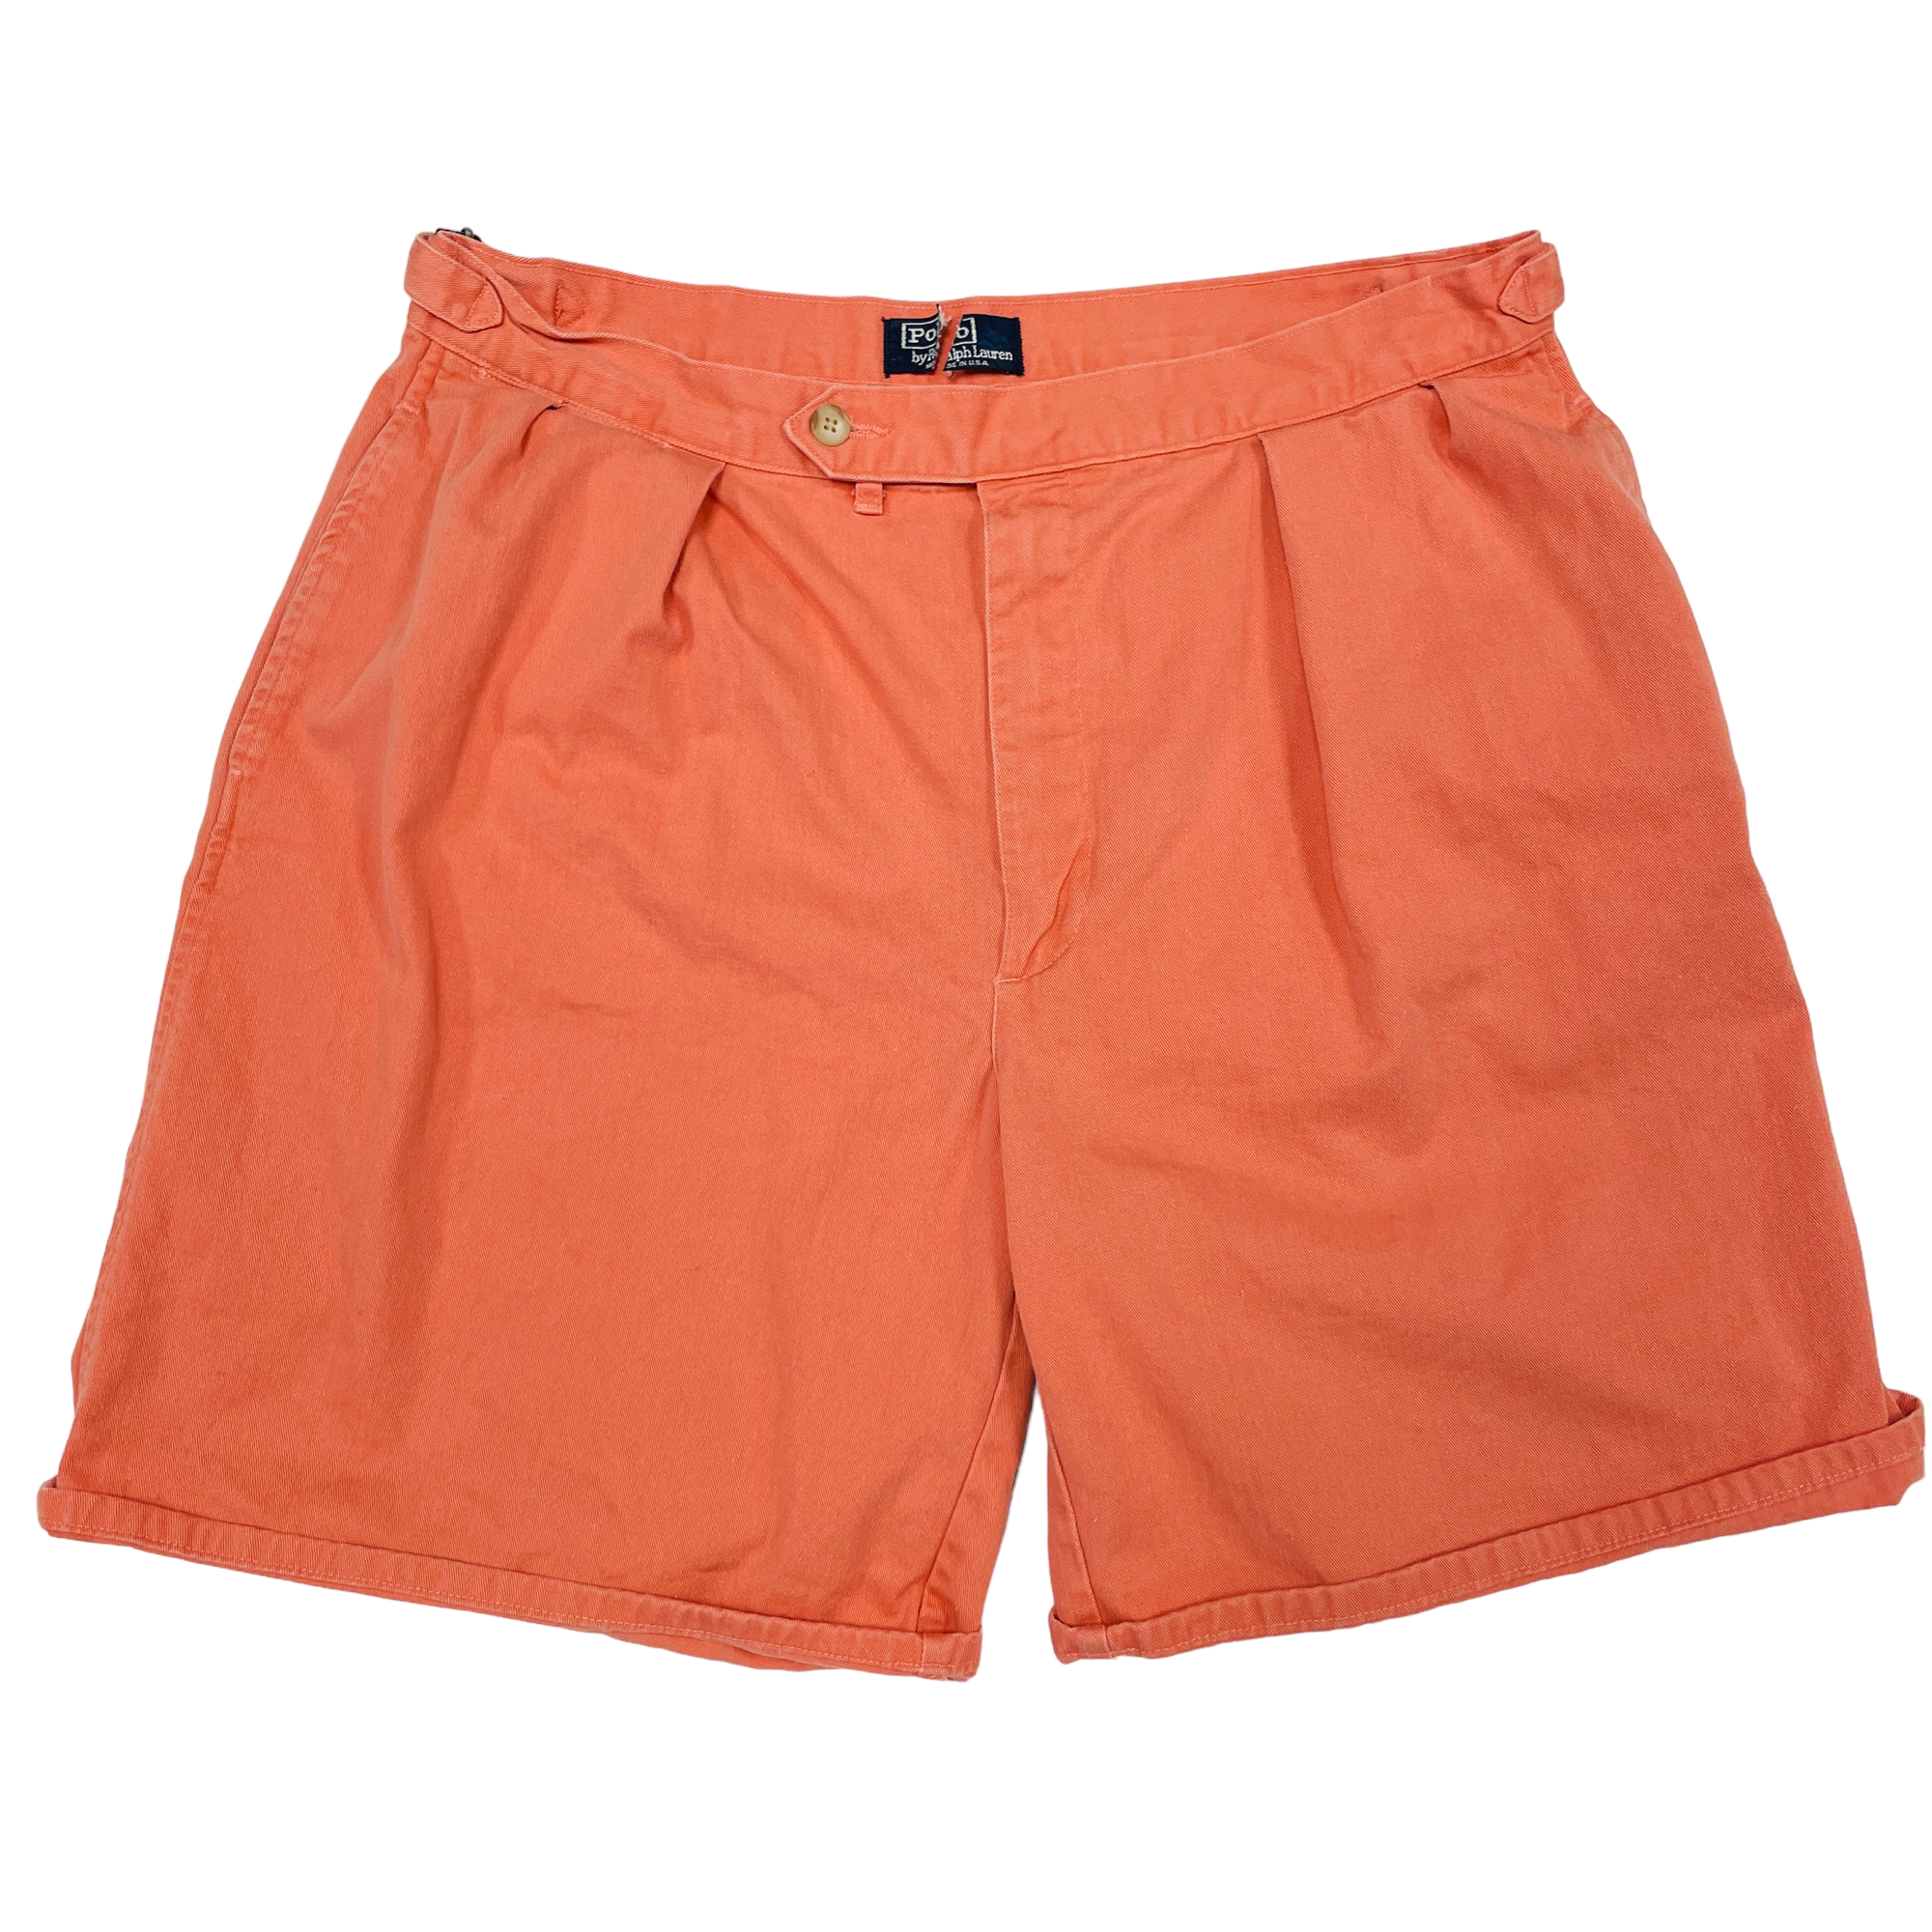 Polo Ralph Lauren Chino Shorts - W34